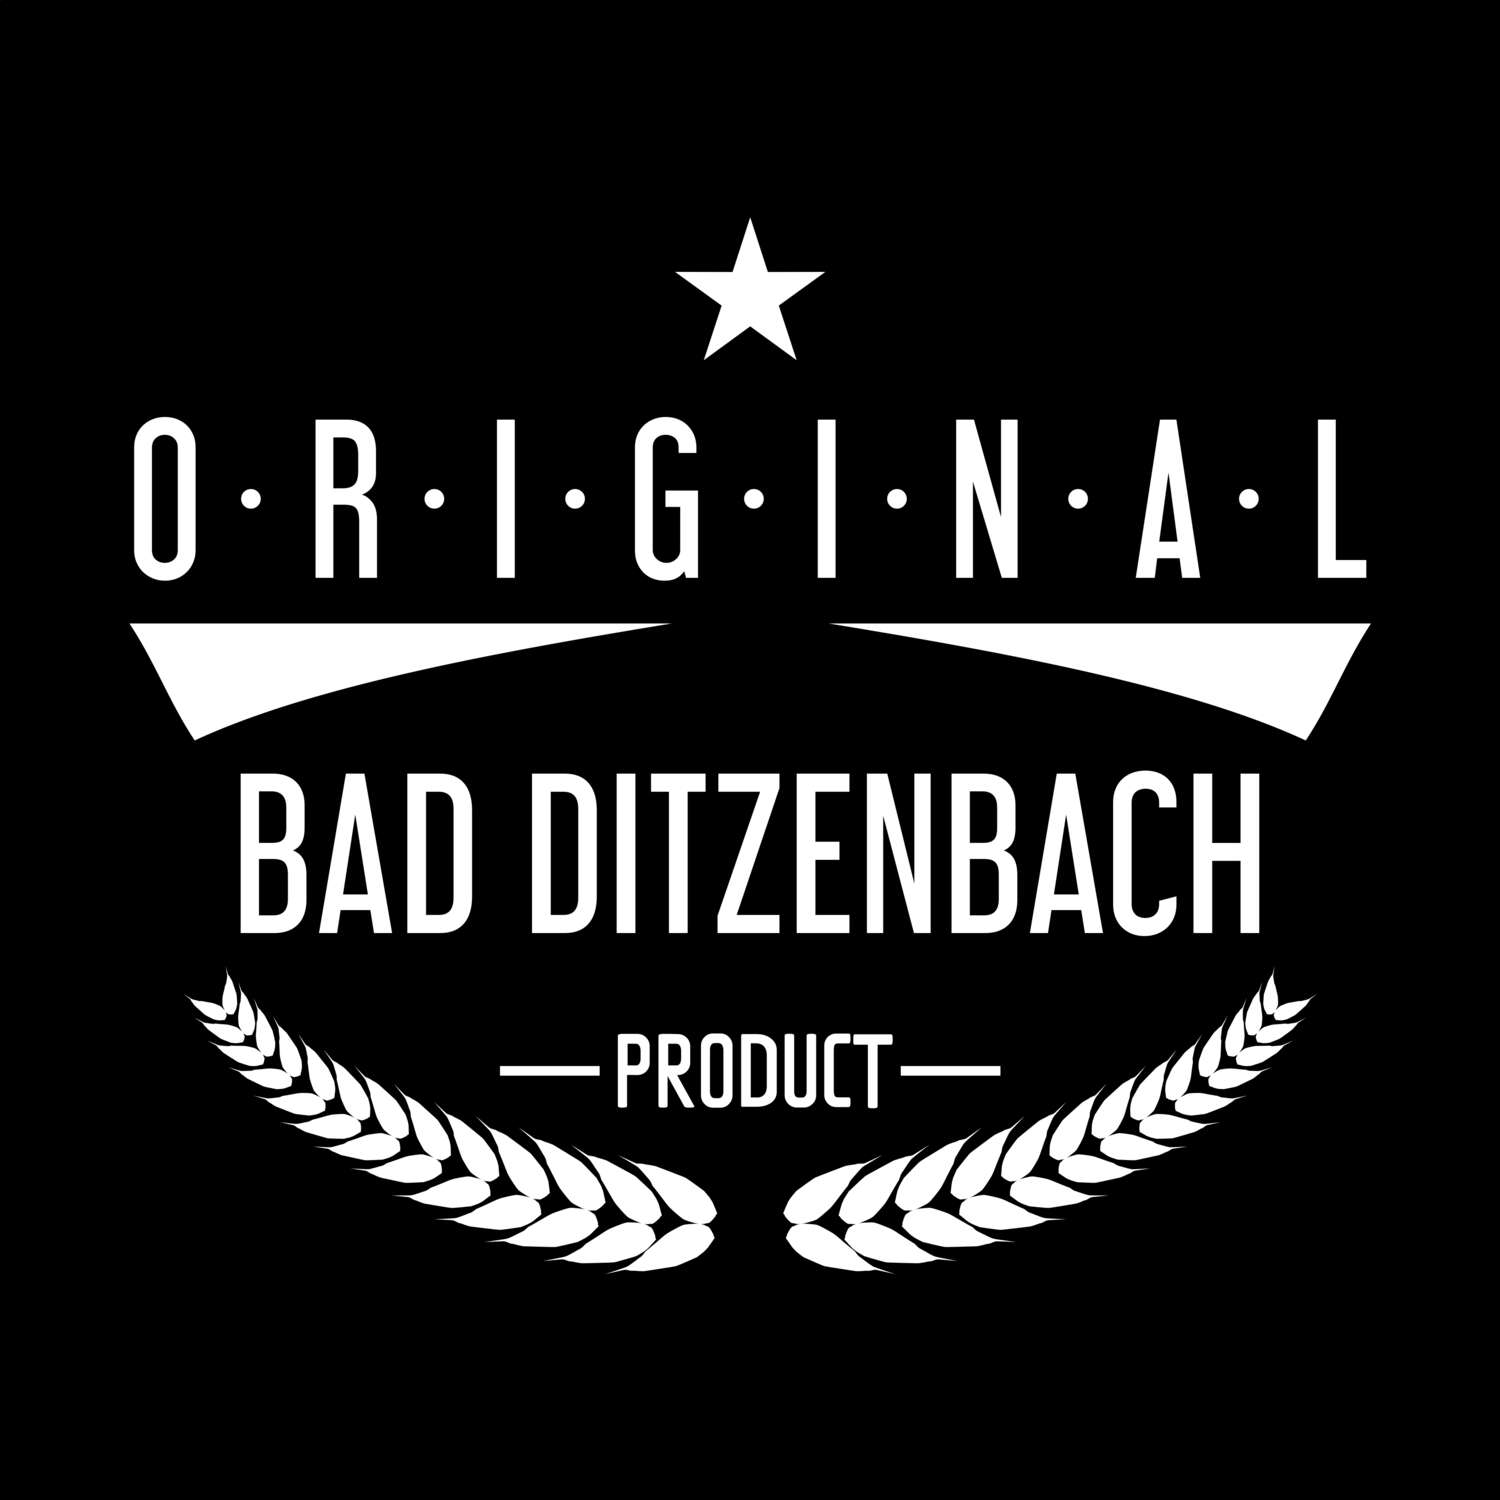 Bad Ditzenbach T-Shirt »Original Product«